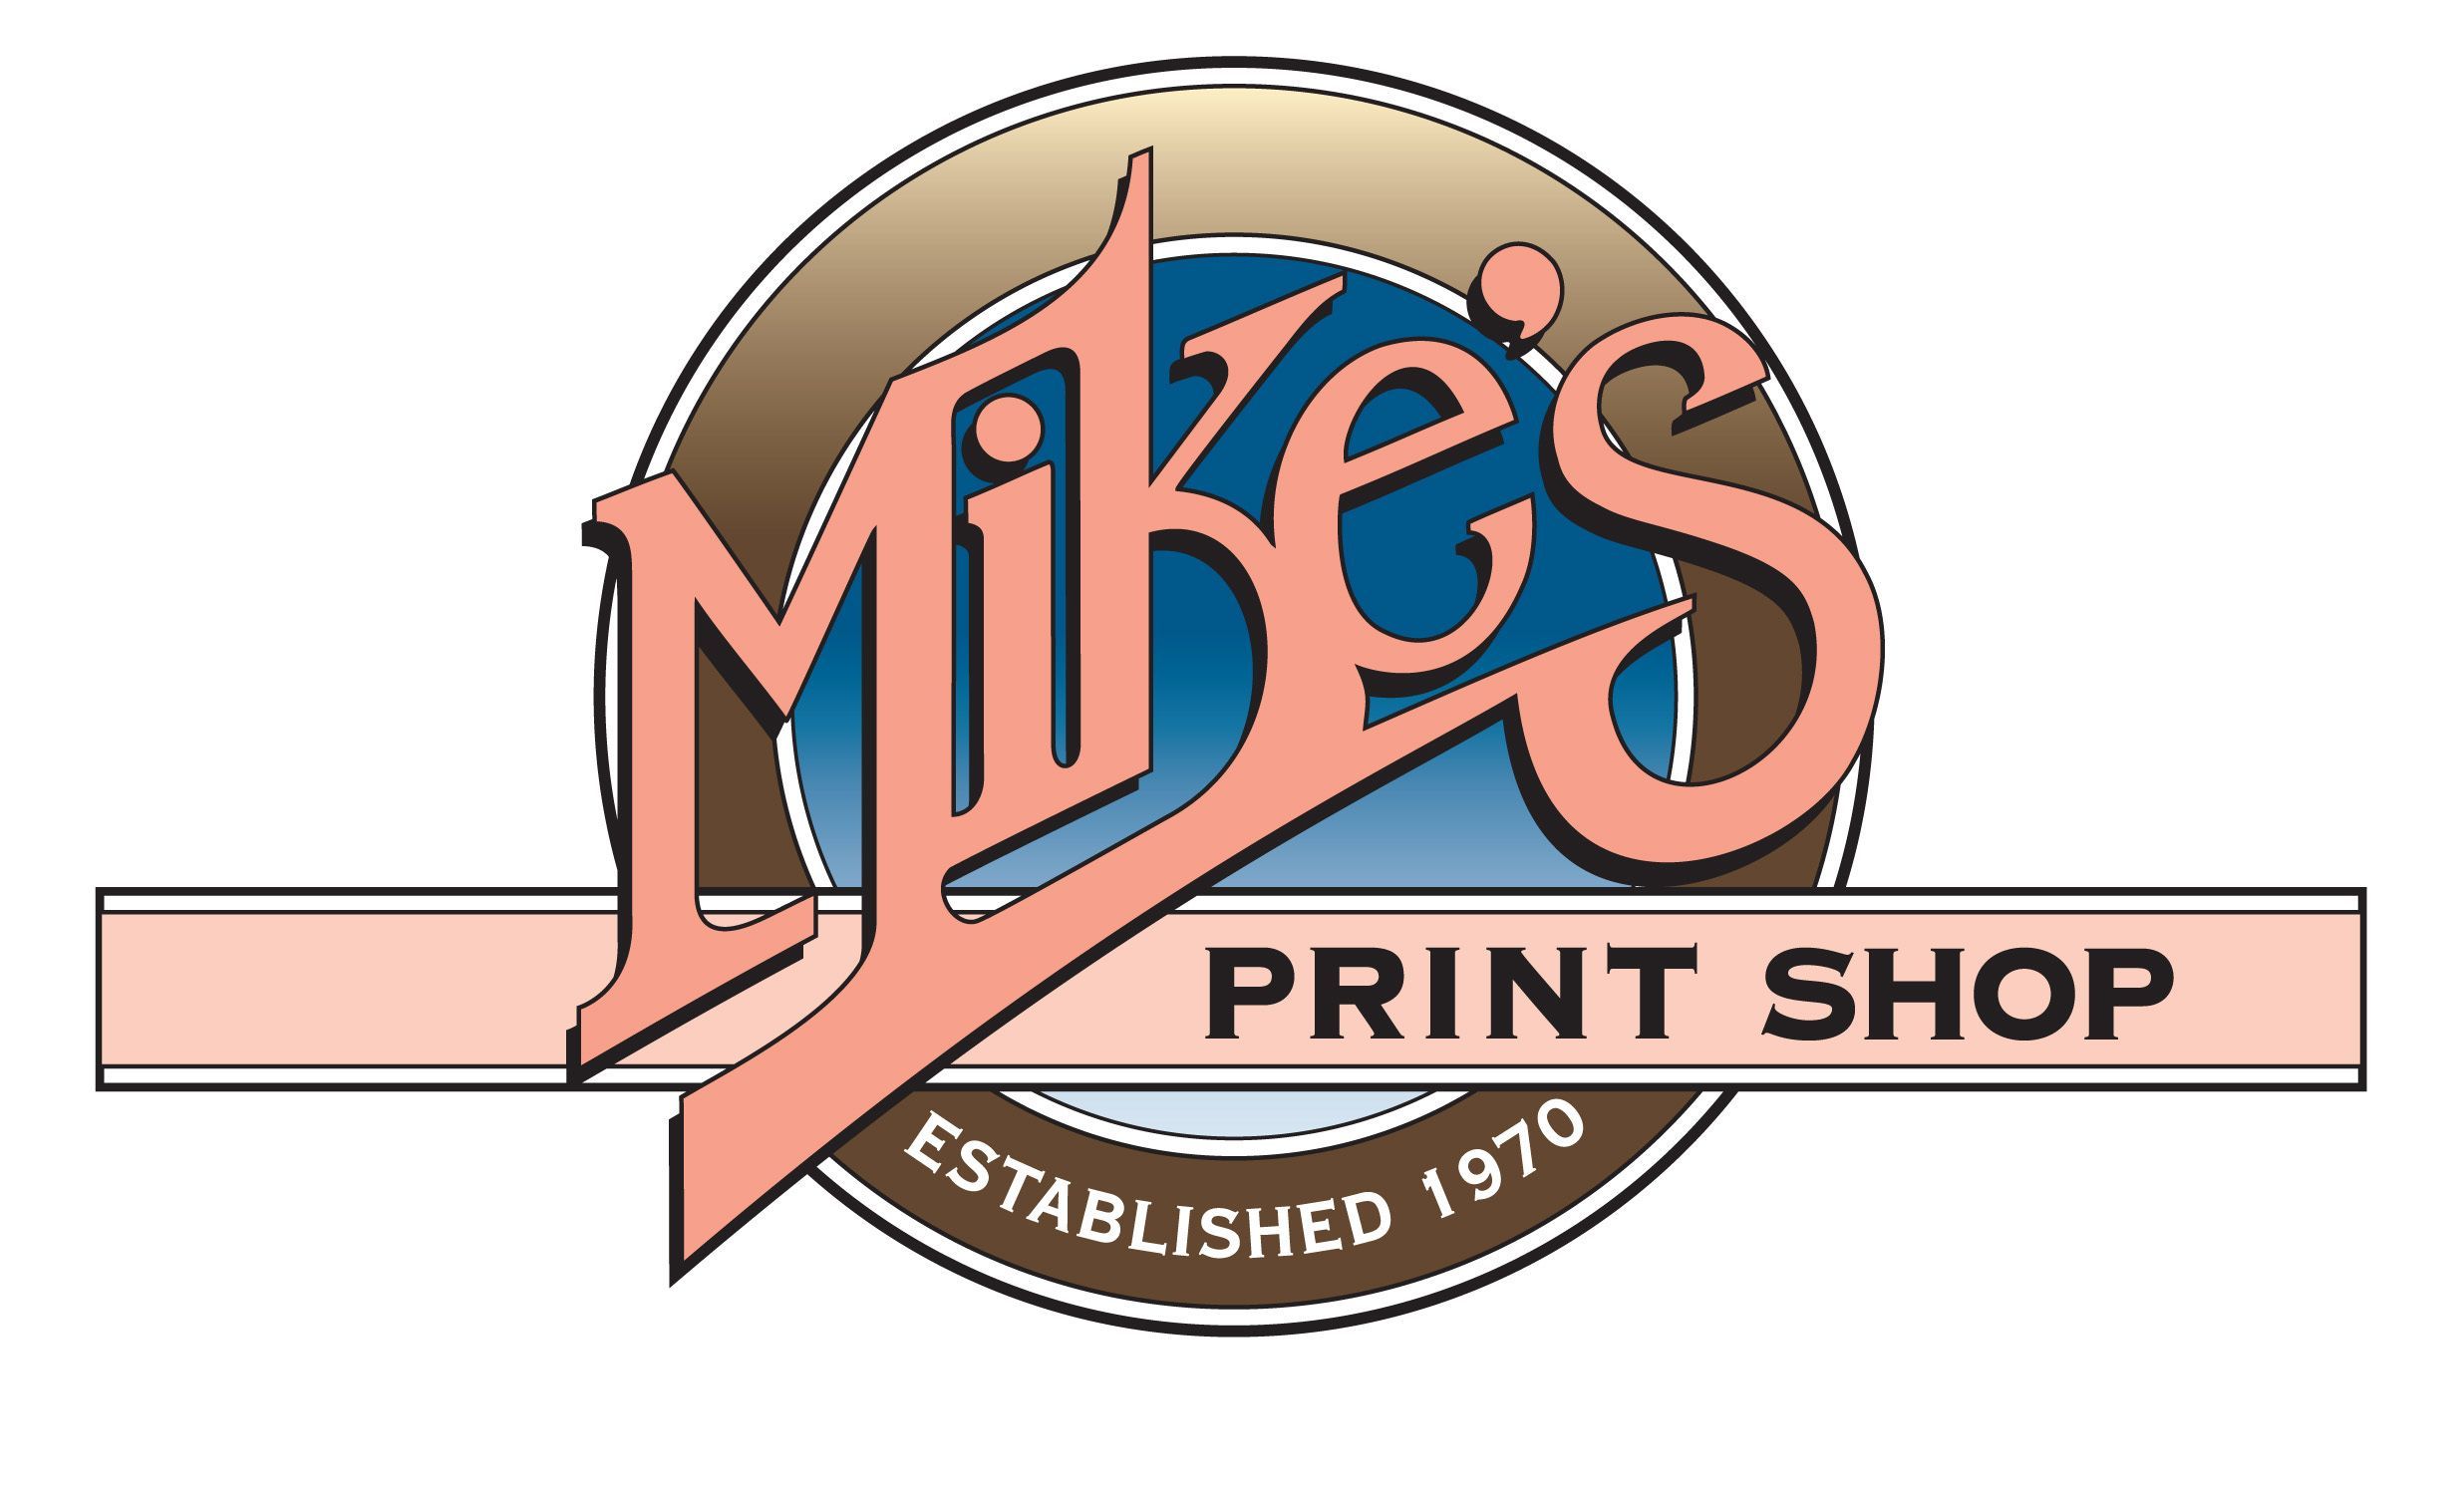 Mike's Print Shop